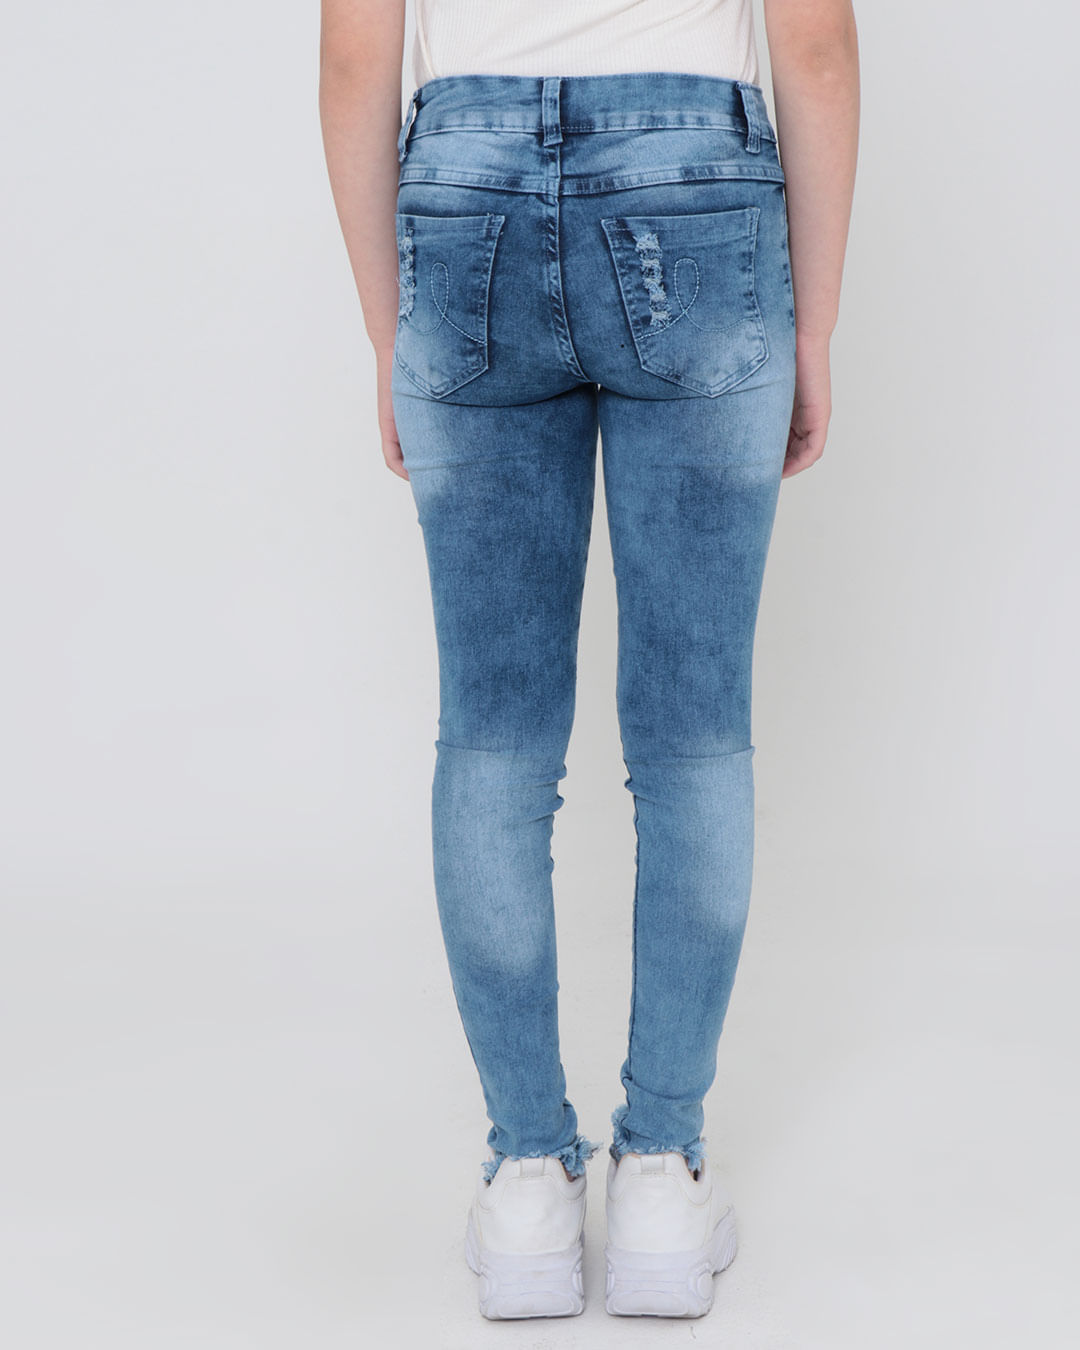 39421000117045-blue-jeans-medio-3